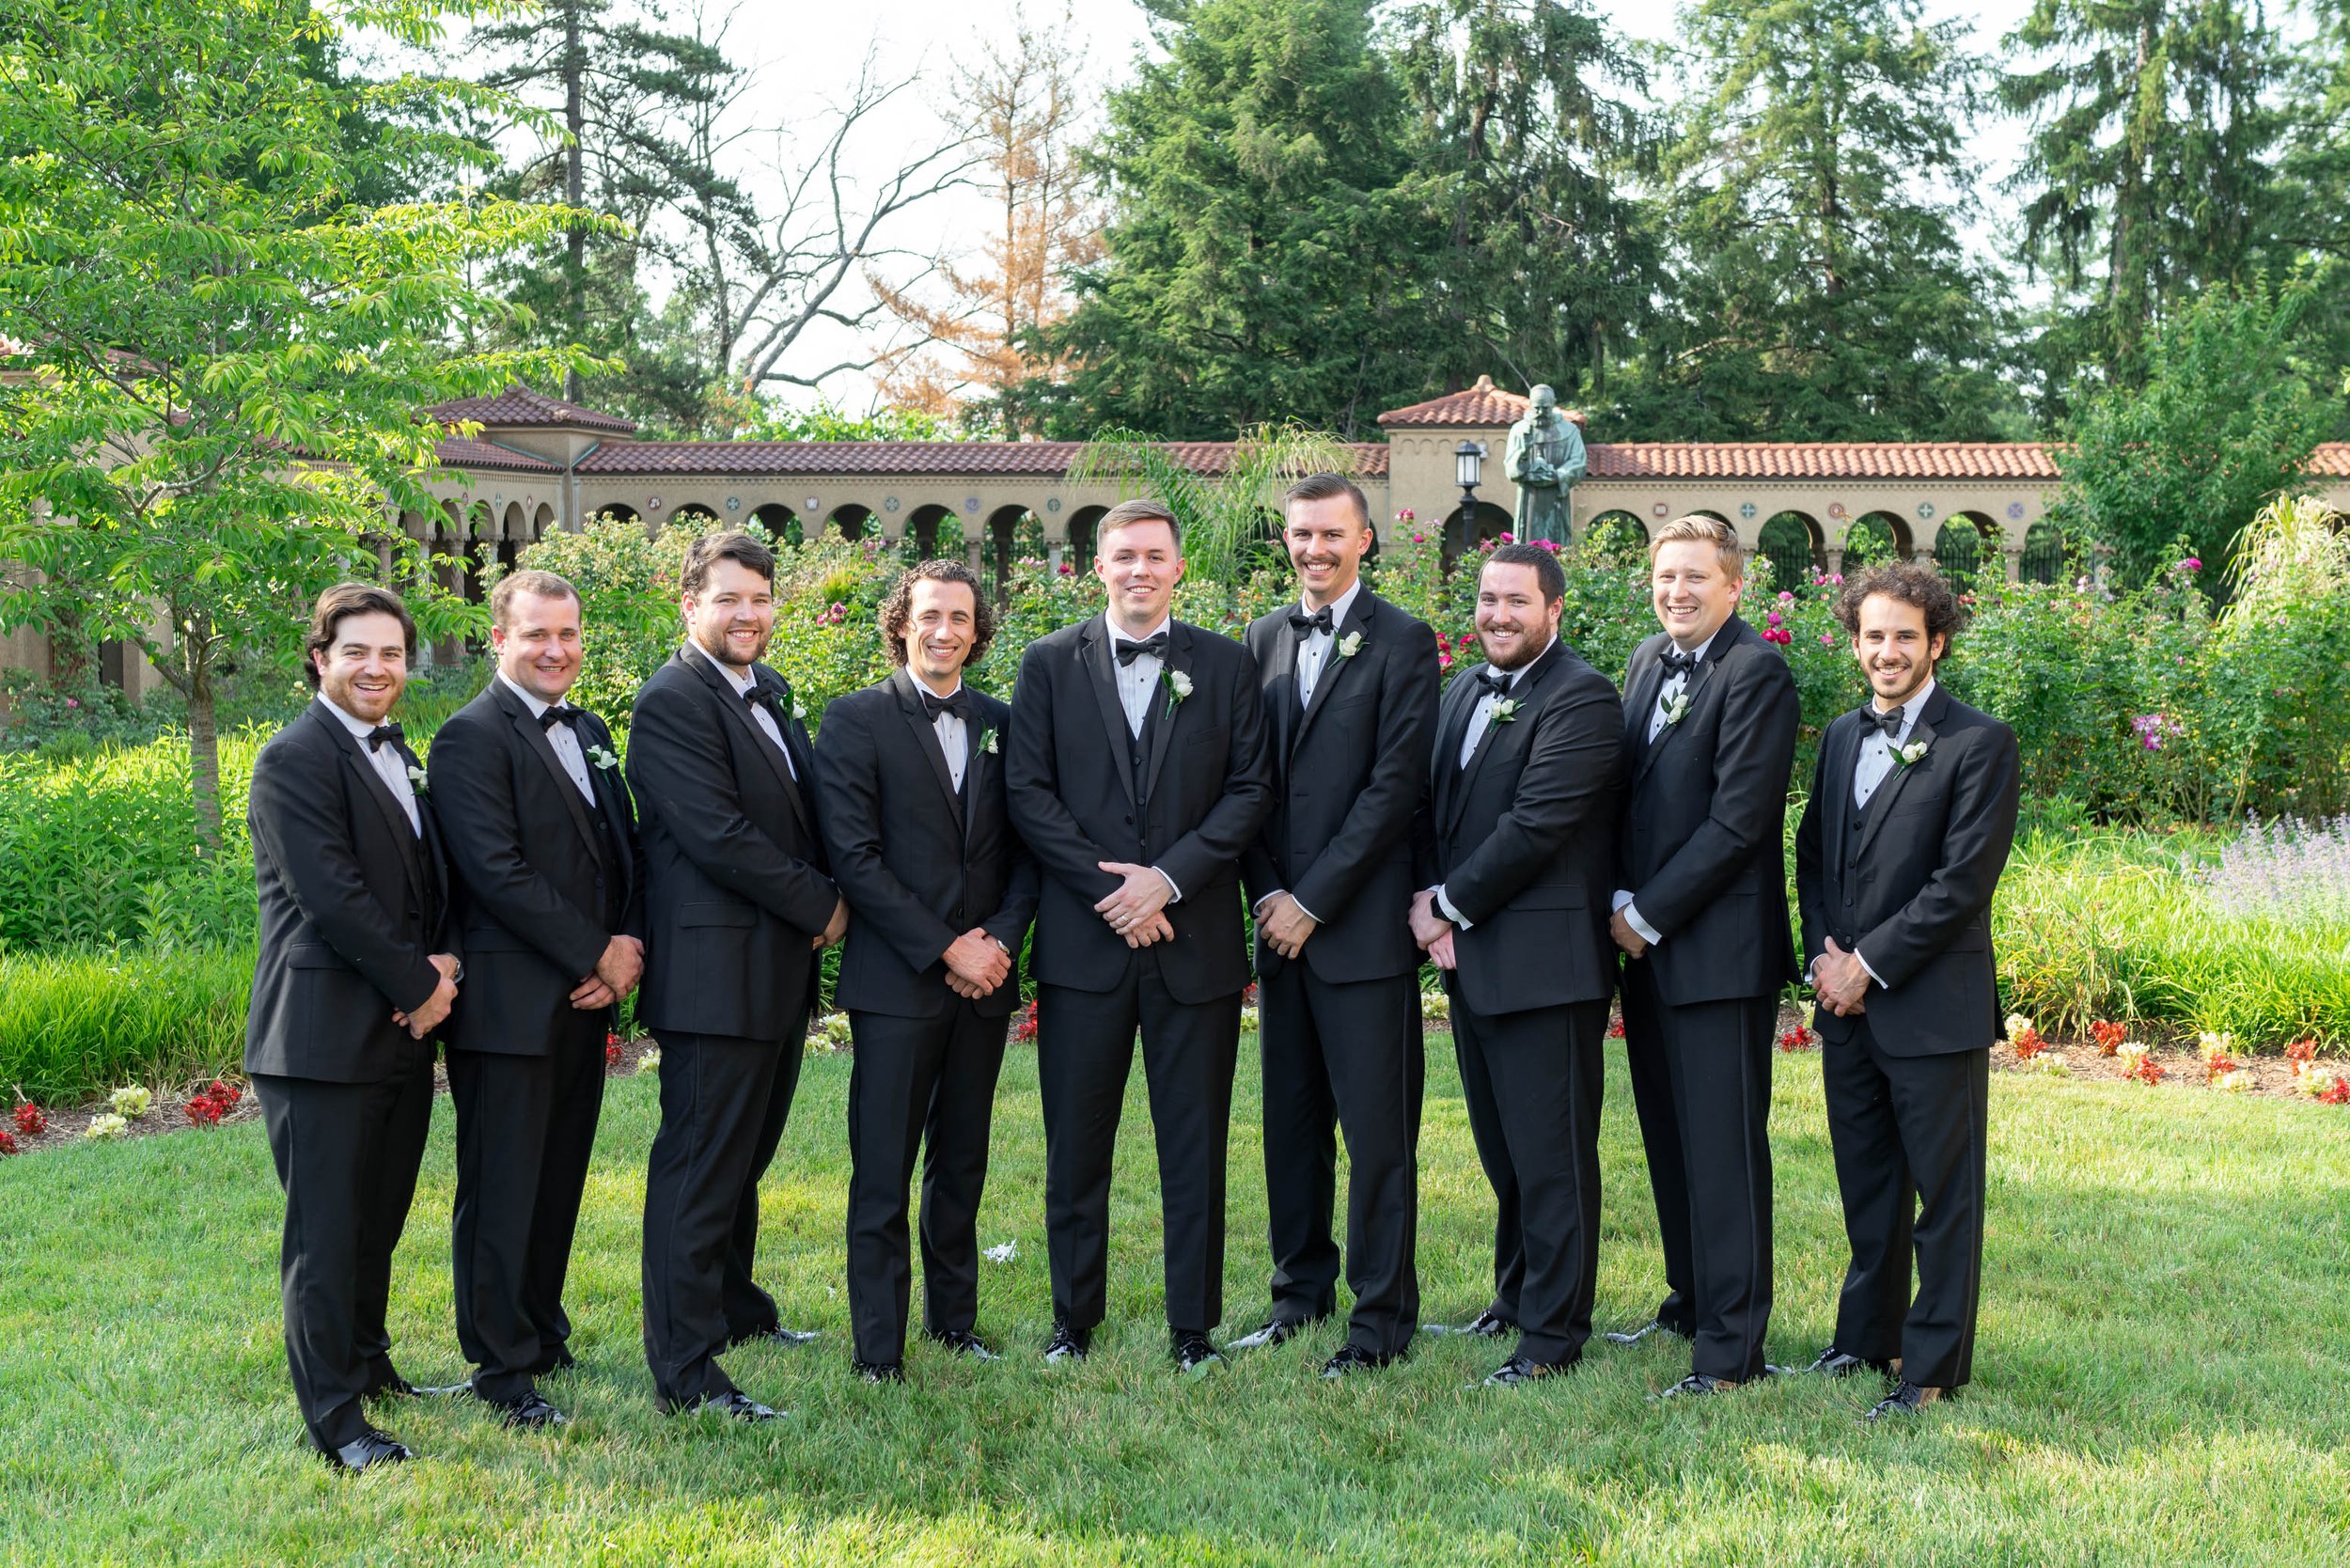 Groomsmen in tuxedos in garden St Francis Hall Monastery in summer June wedding photos